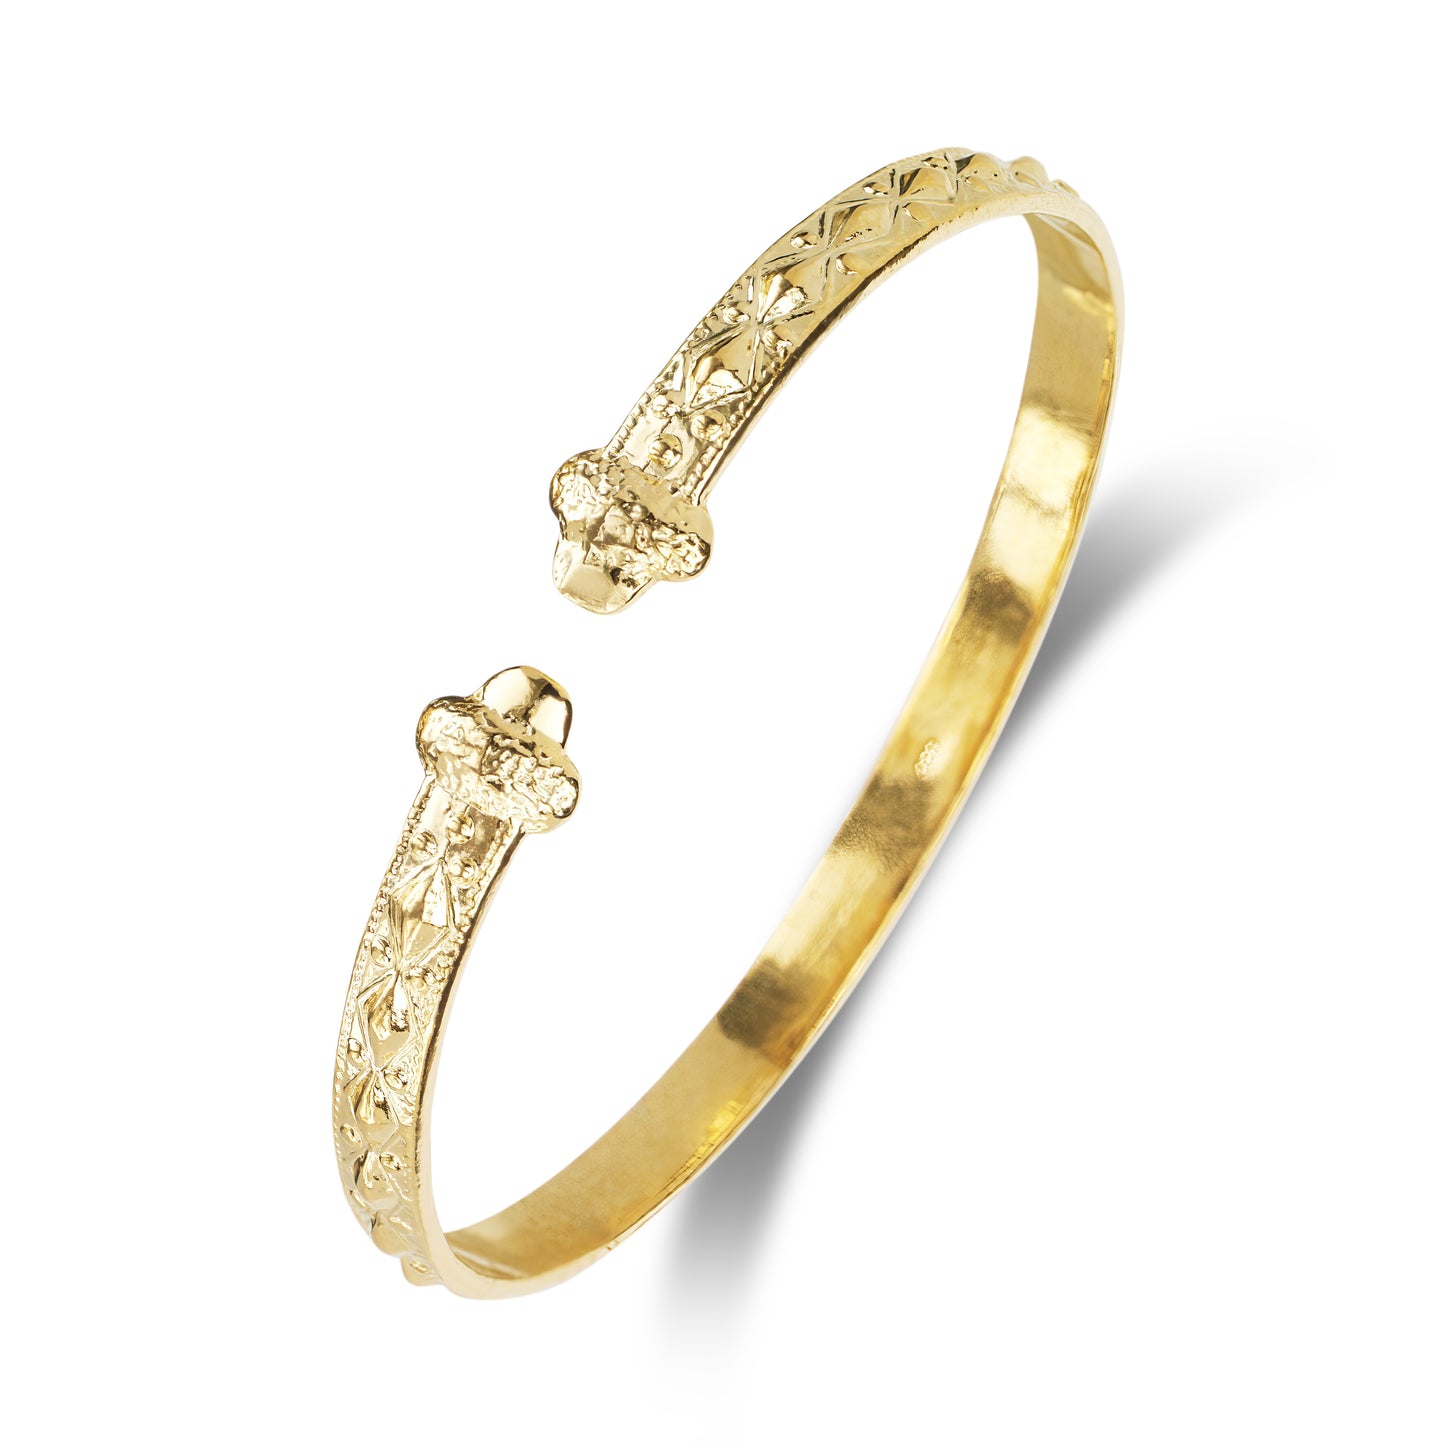 Solid 10k Yellow Gold & Diamond Flat Spiral Dangle/Drop Earrings